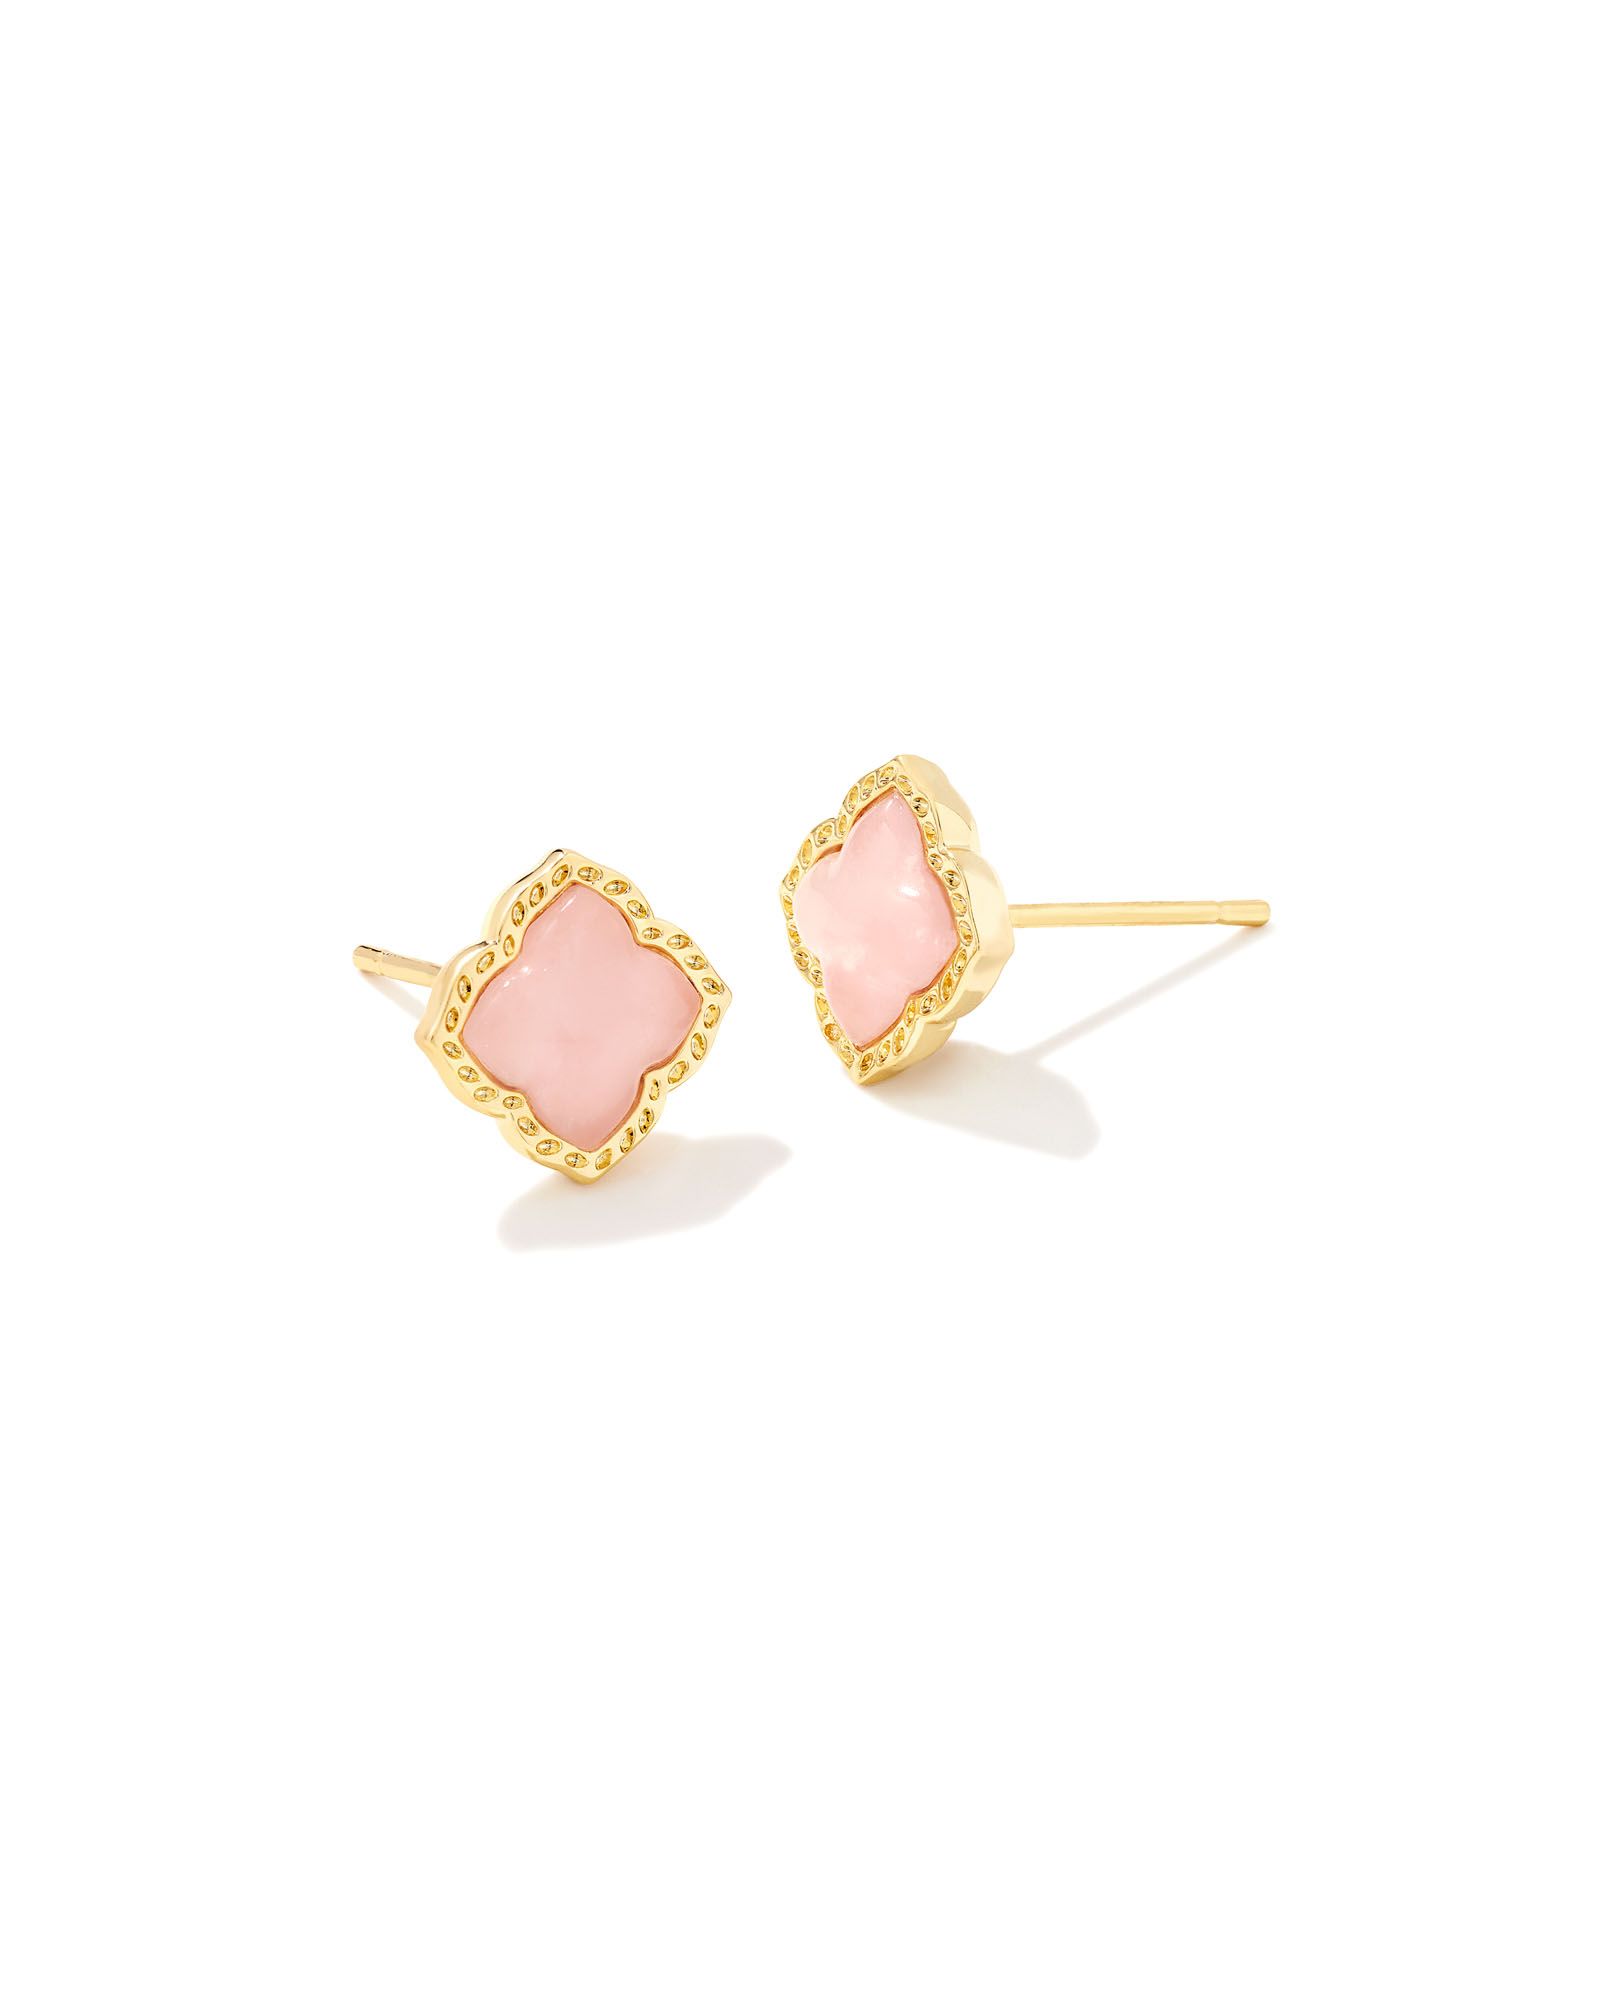 Mallory Gold Stud Earrings in Rose Quartz | Kendra Scott | Kendra Scott